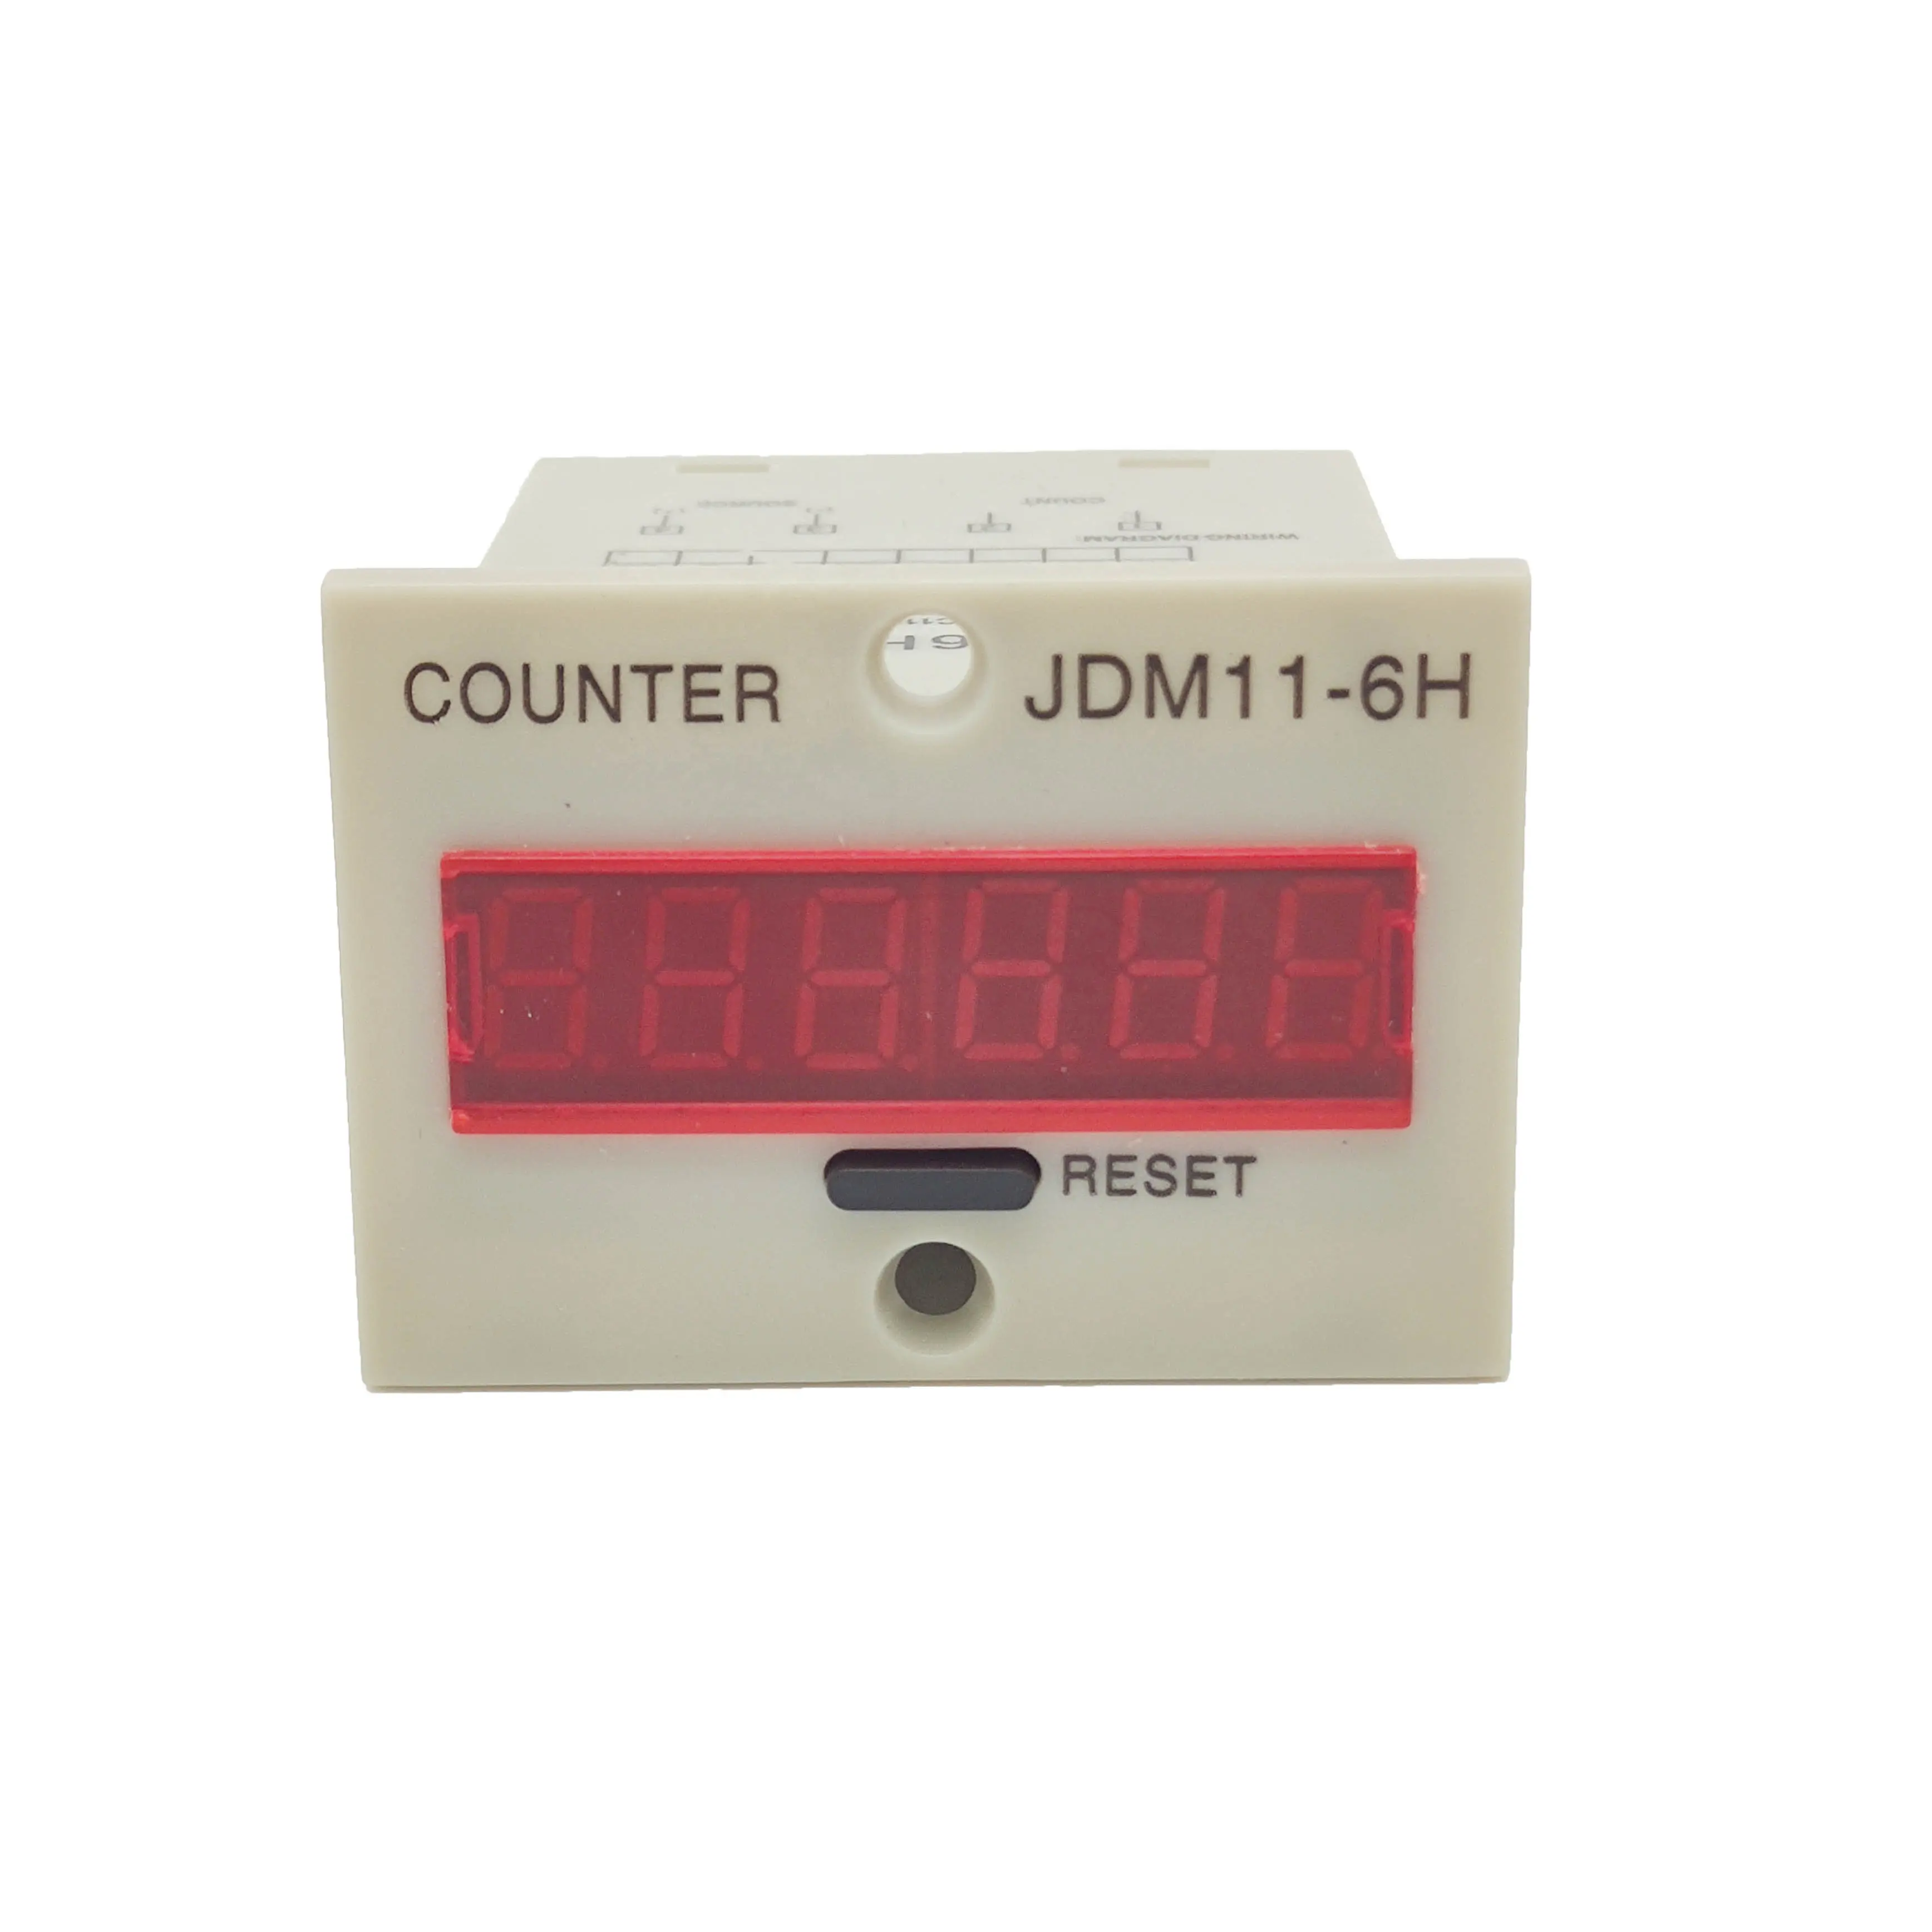 Jdm11-6hデジタルディスプレイ電子カウンター産業用パンチ組立ラインカウントピース停電メモリ220vセンサー